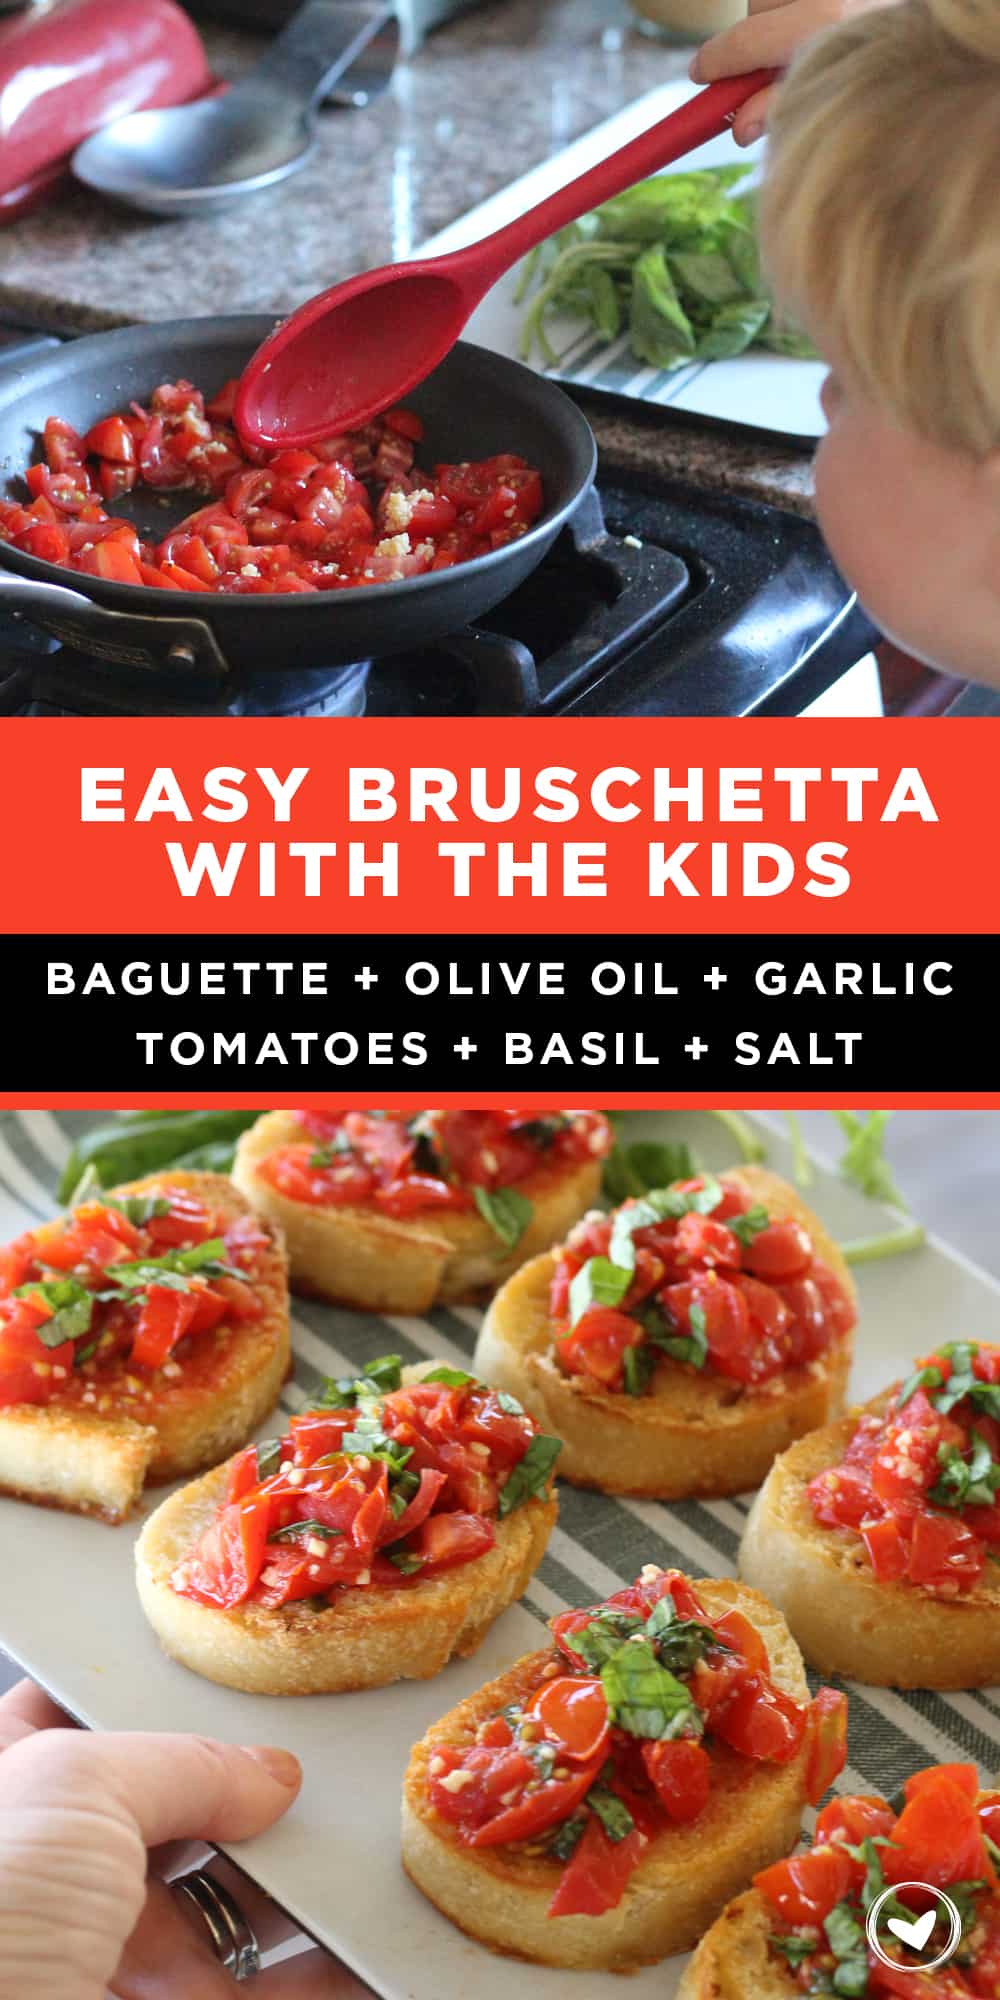 Make Easy Bruschetta With The Kids